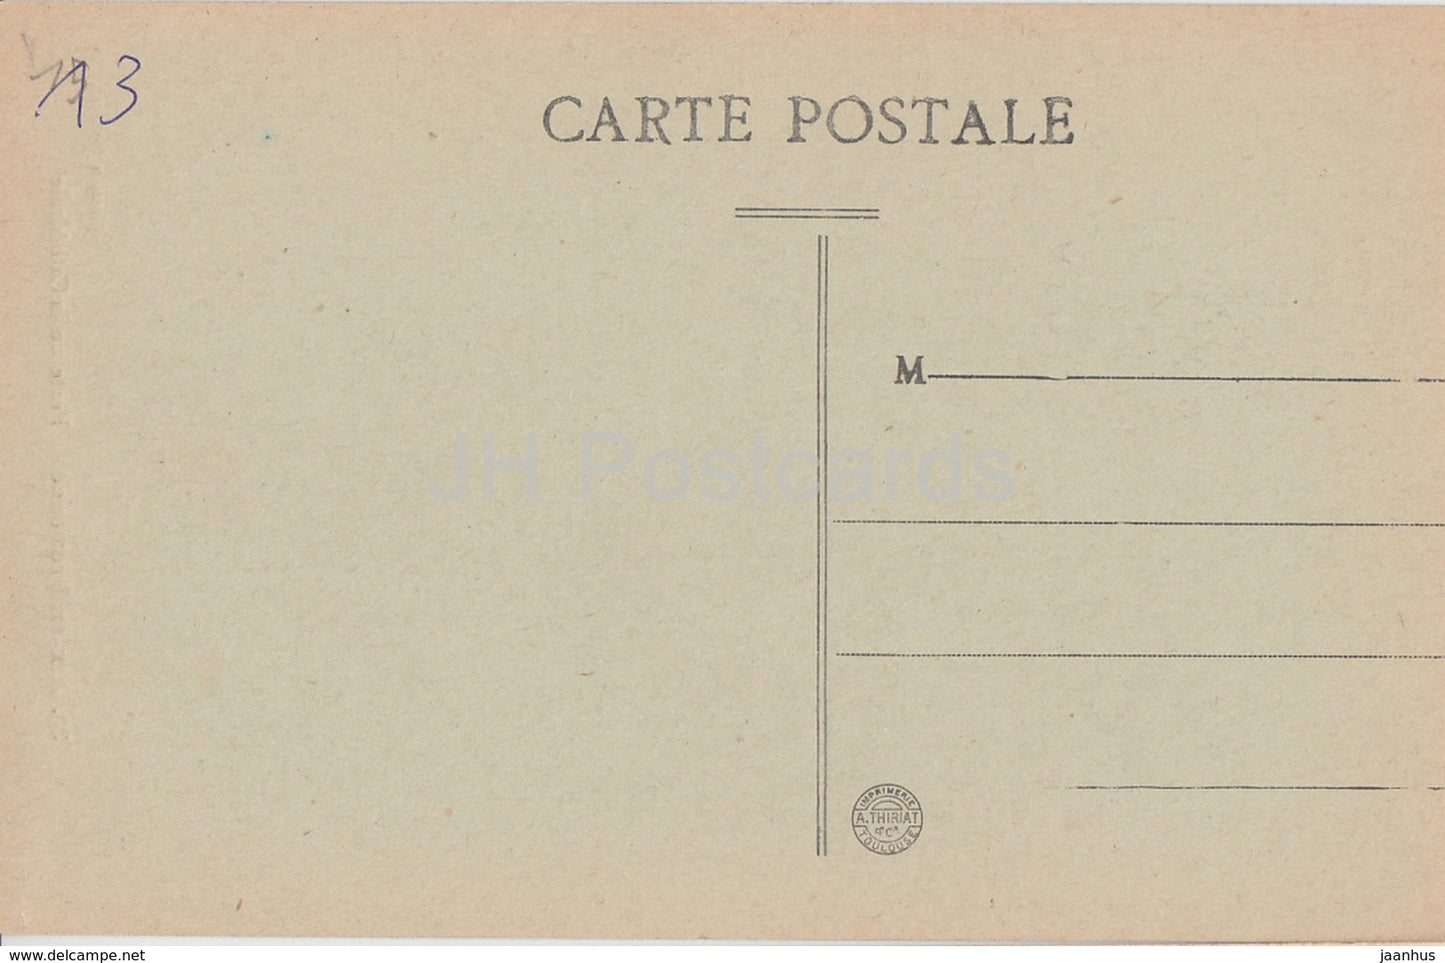 Aix en Provence - Porte de la Cathedrale - cathedrale - 30 - old postcard - France - unused